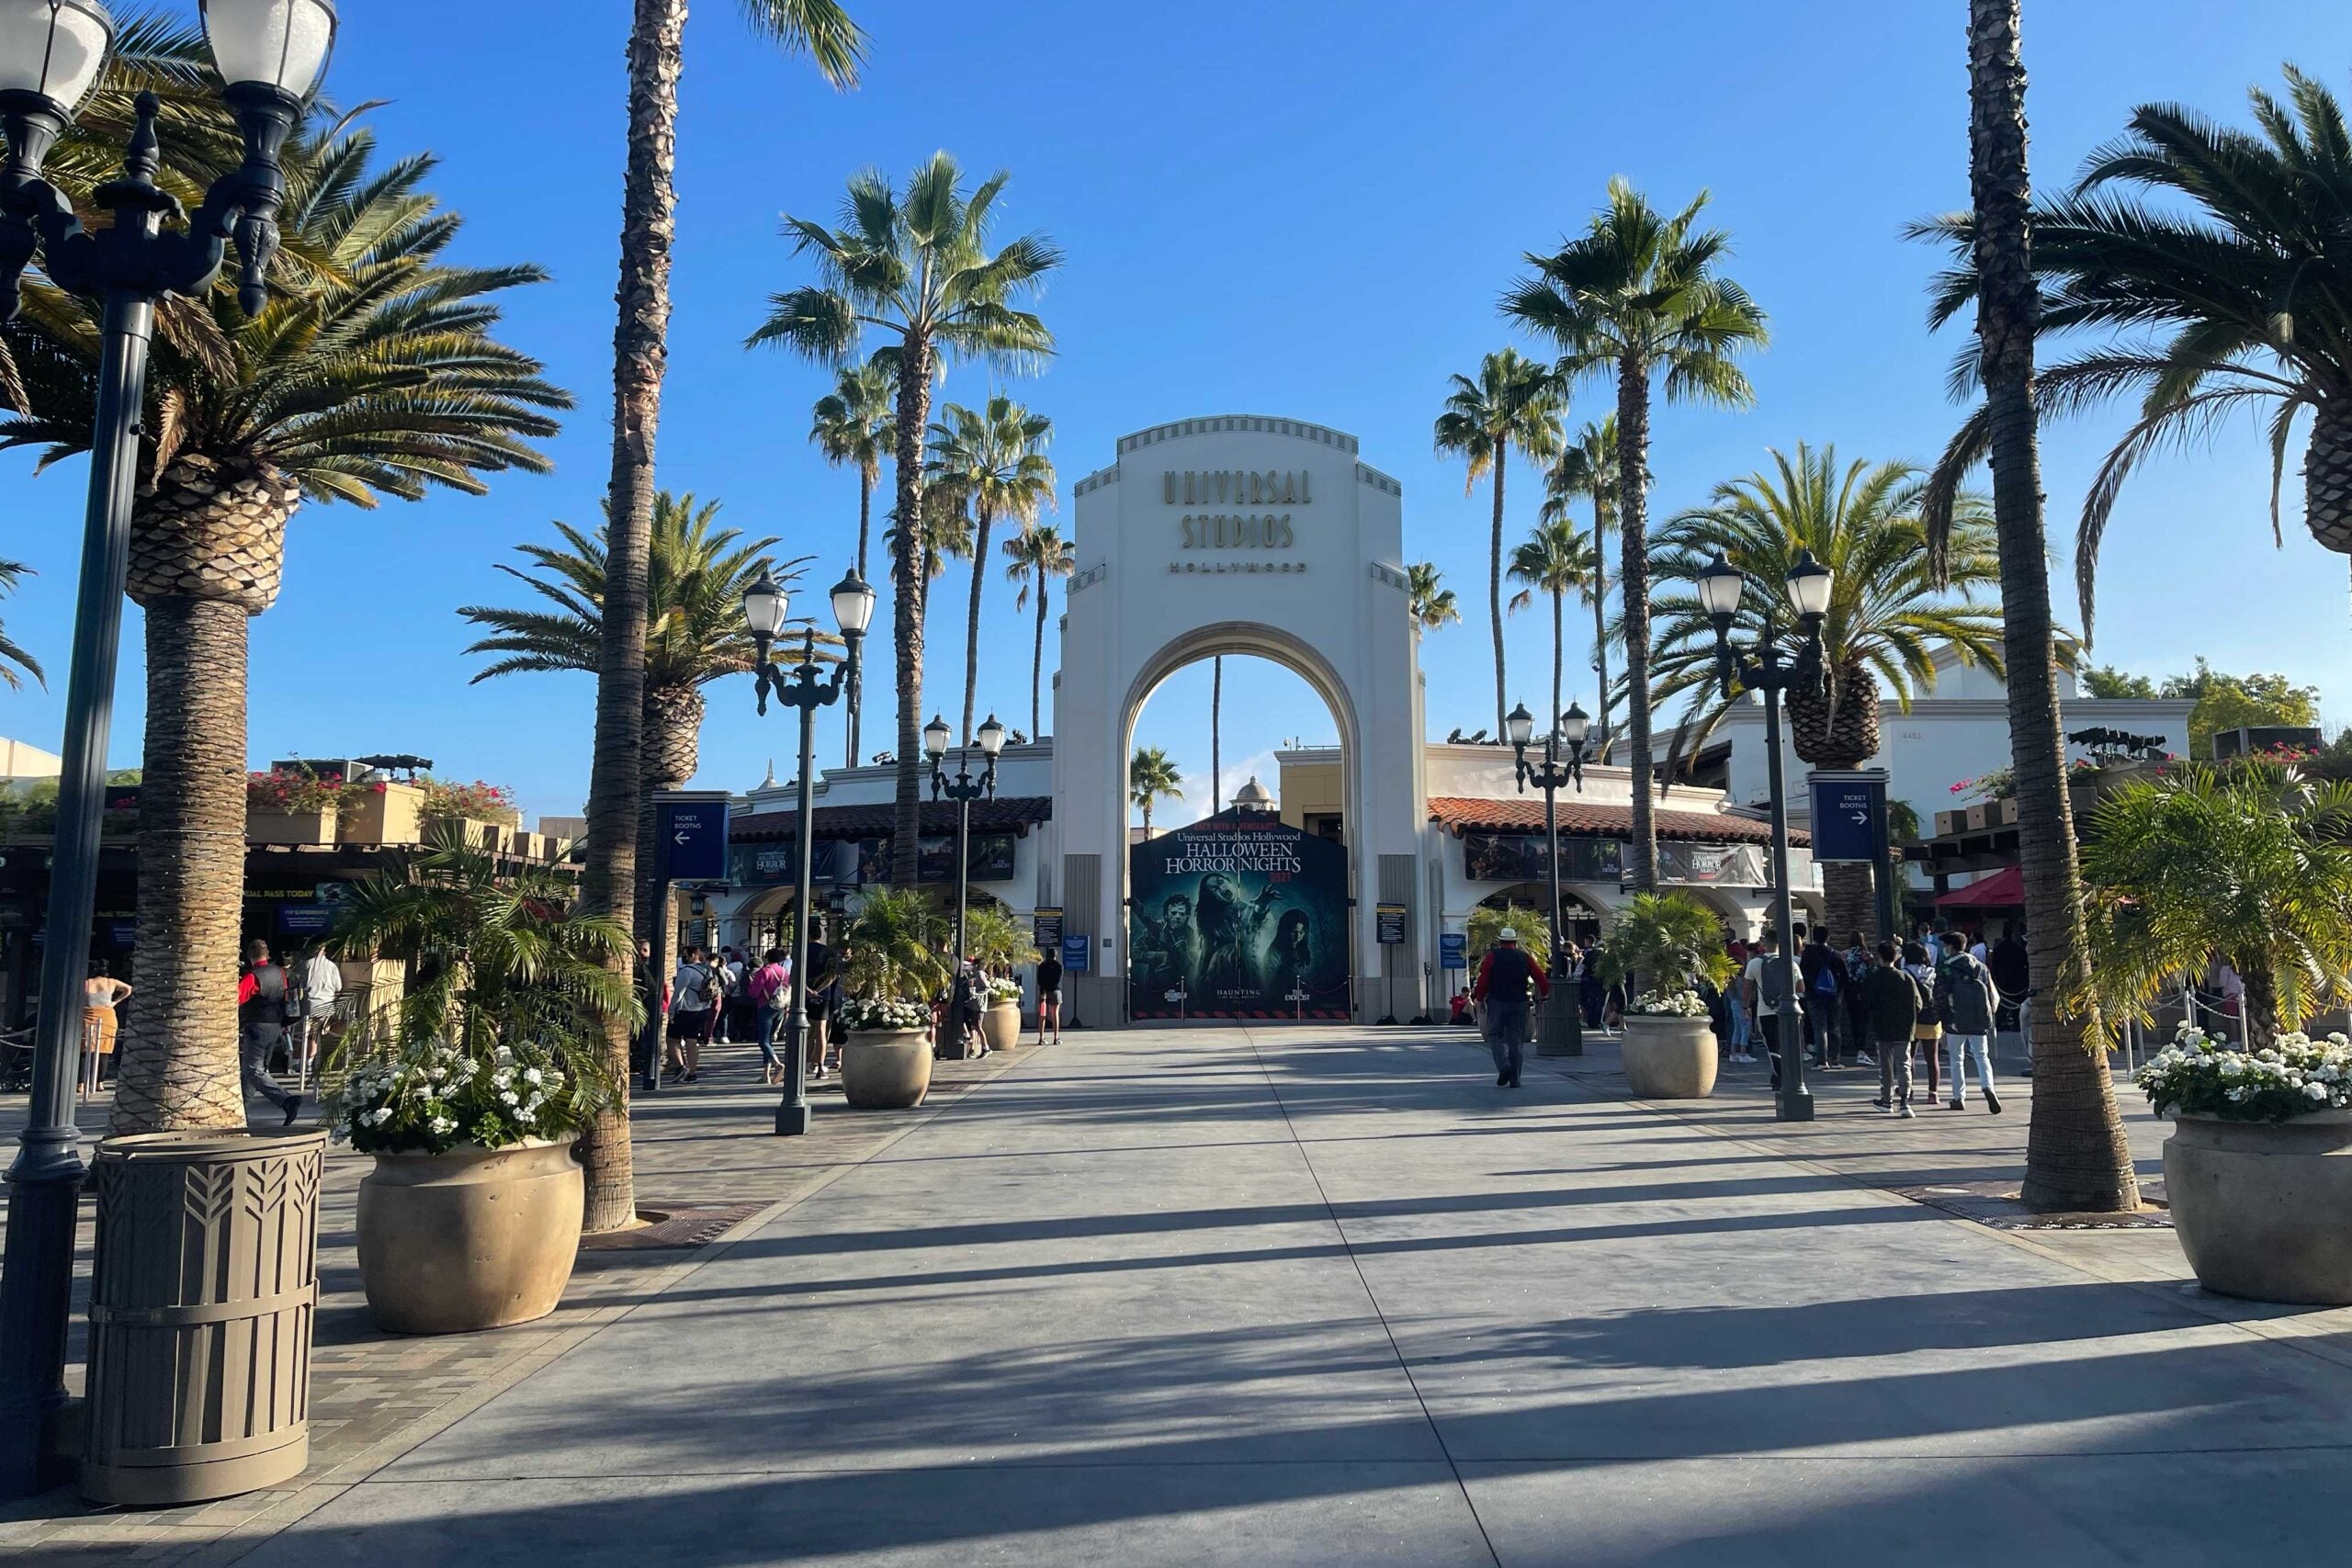 Universal Studios Hollywood entrance arch